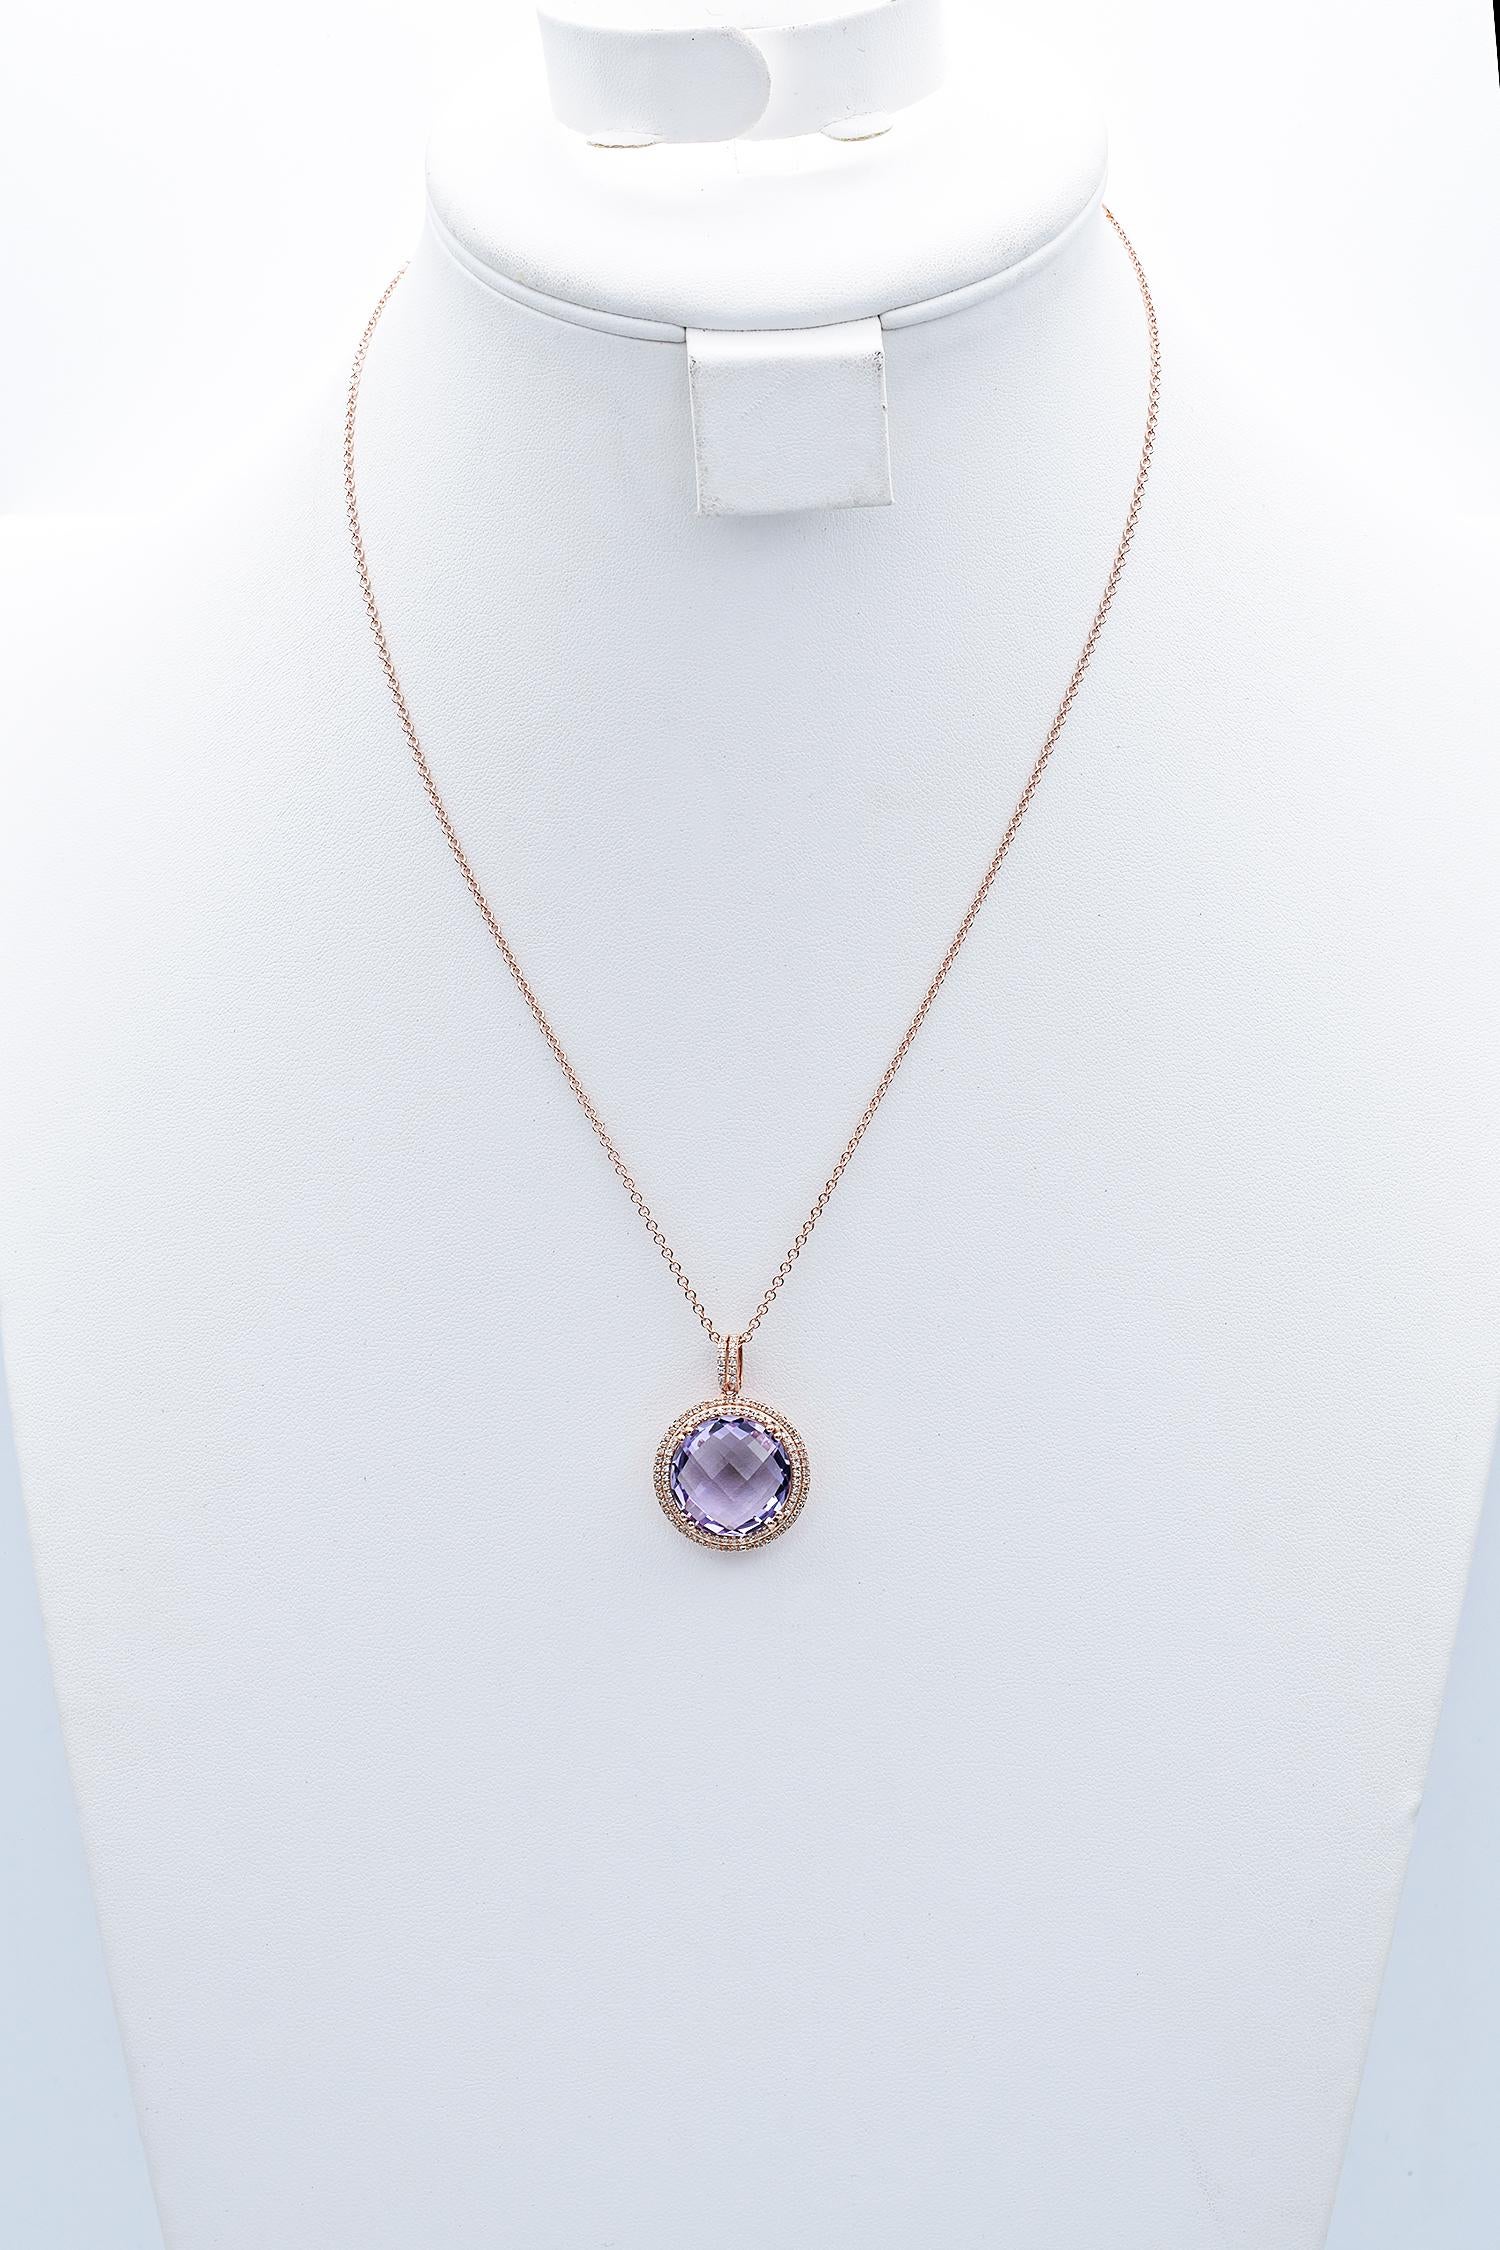 Estate 9.16 Ct Amethyst & 0.61 TCW Diamond Rose Gold Pendant Necklace Box For Sale 1